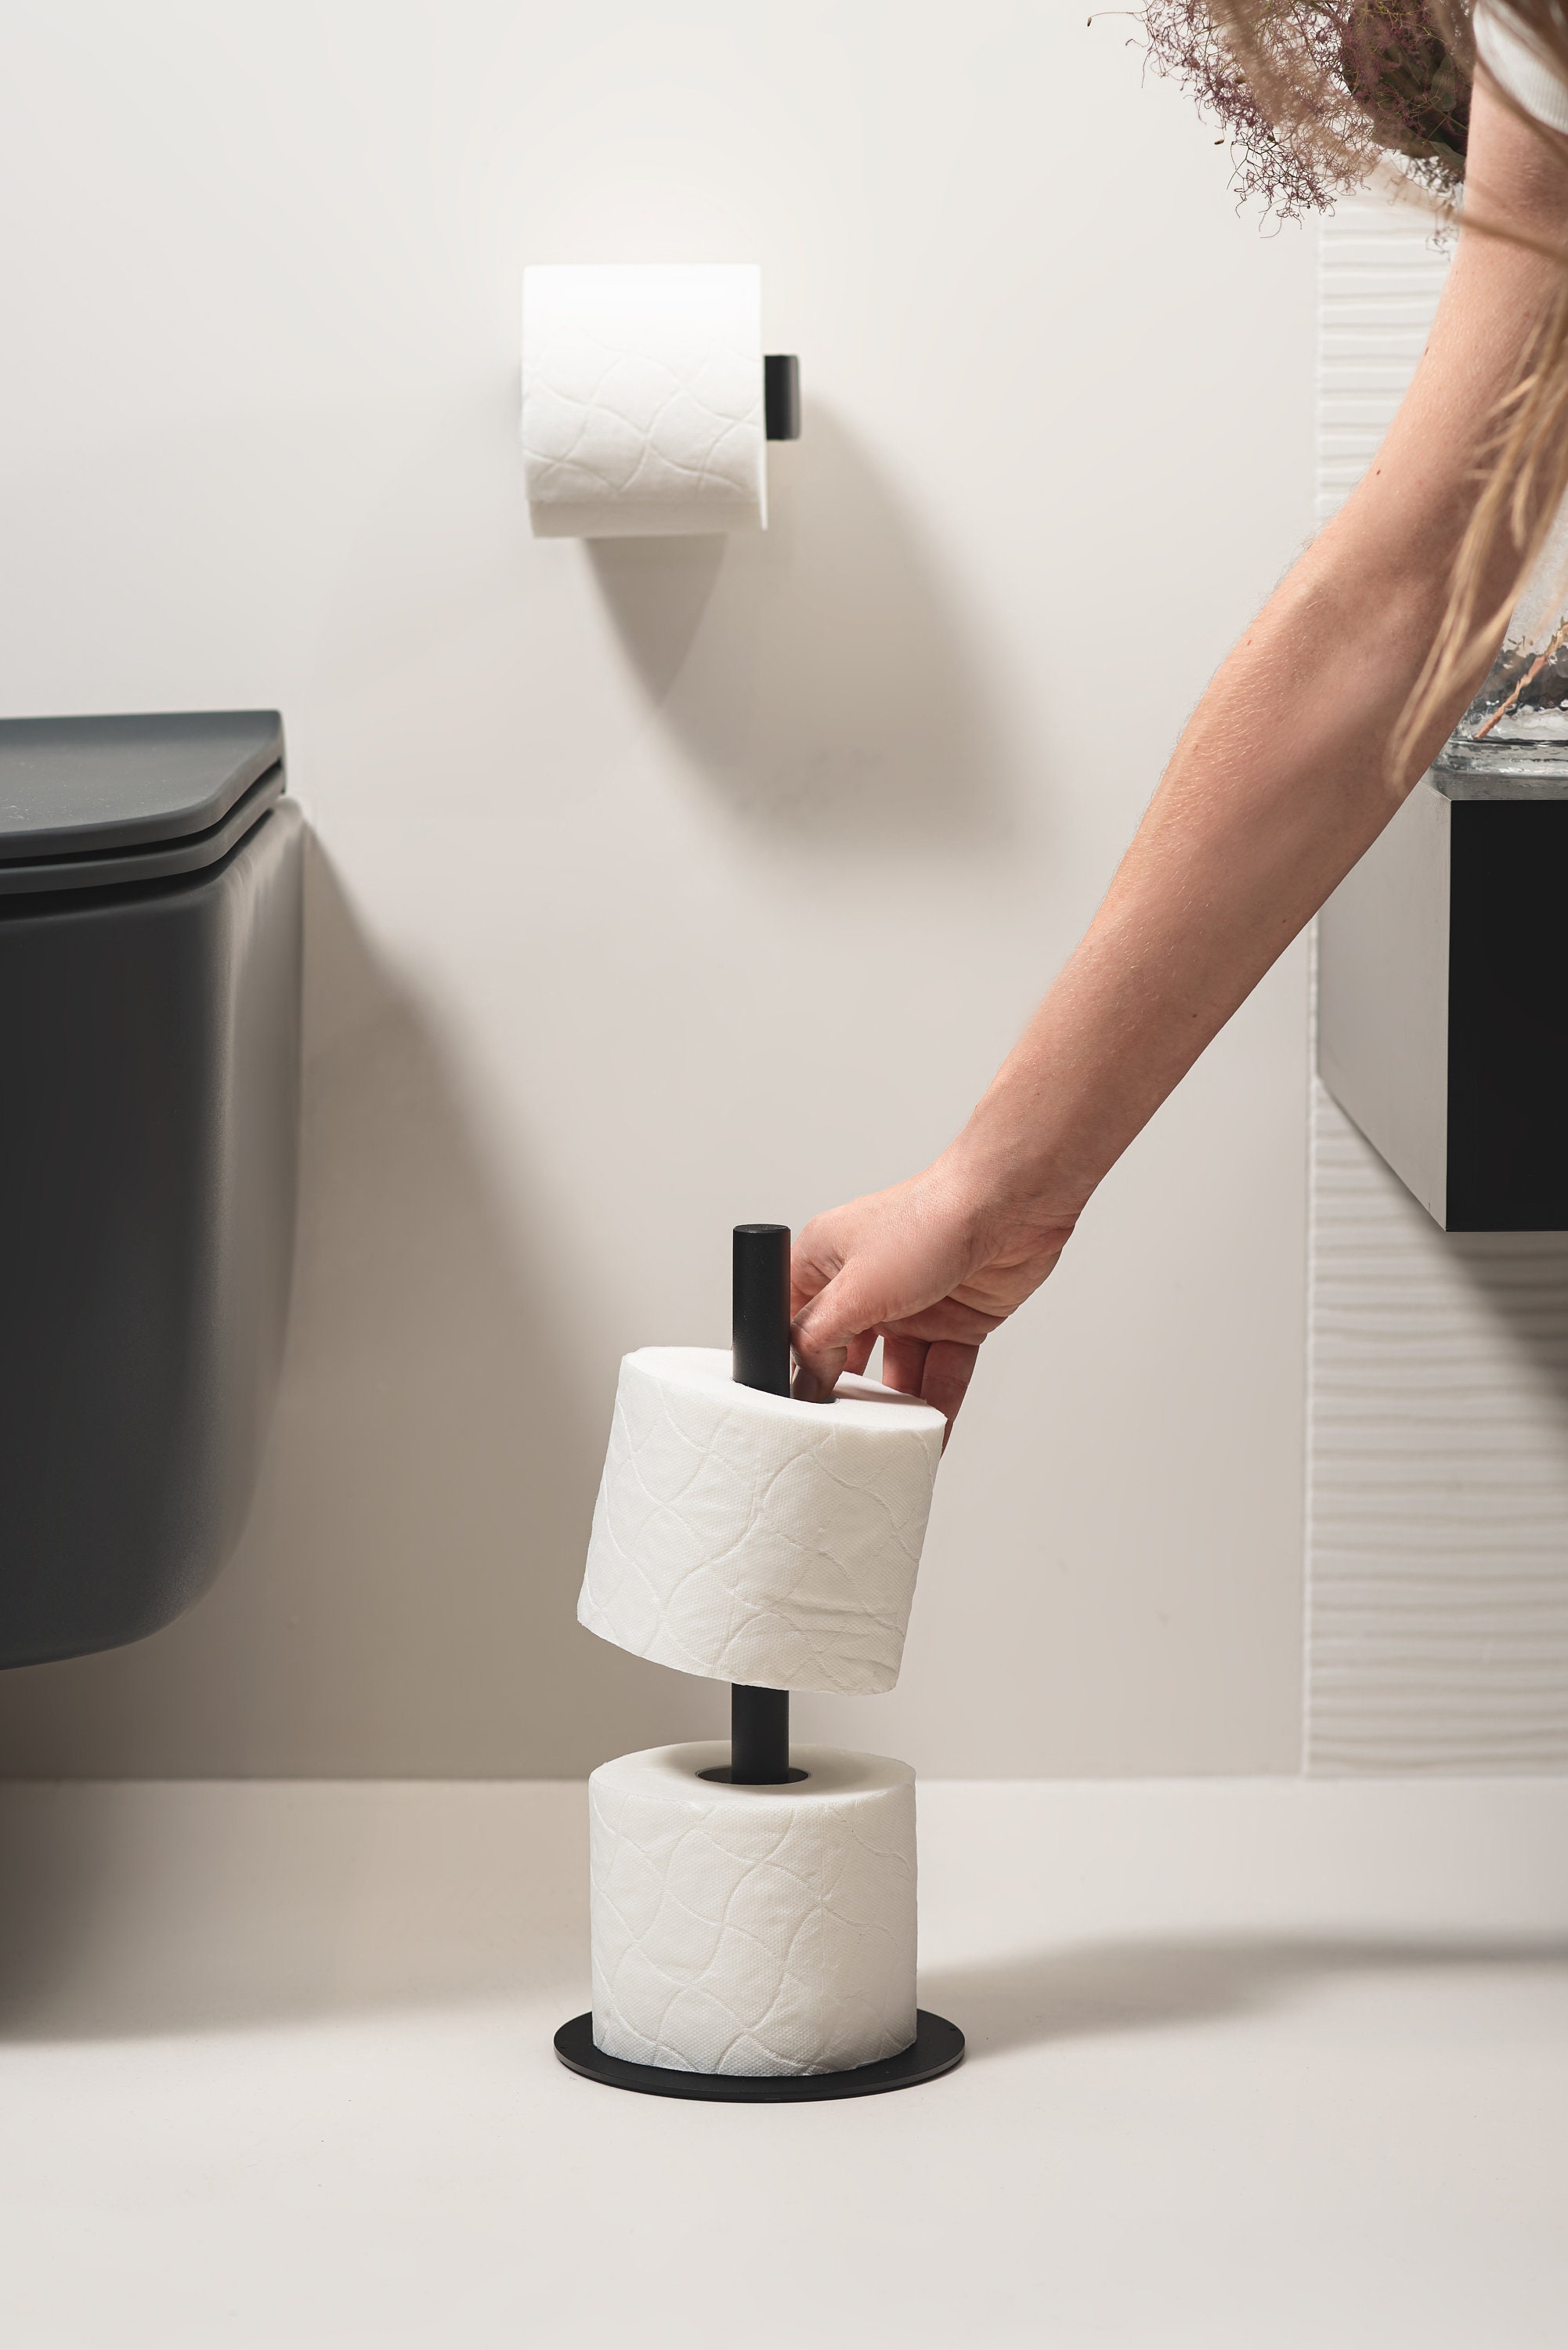 Modern Black Toilet Paper Holder Hoolio, Bathroom Accessories Set